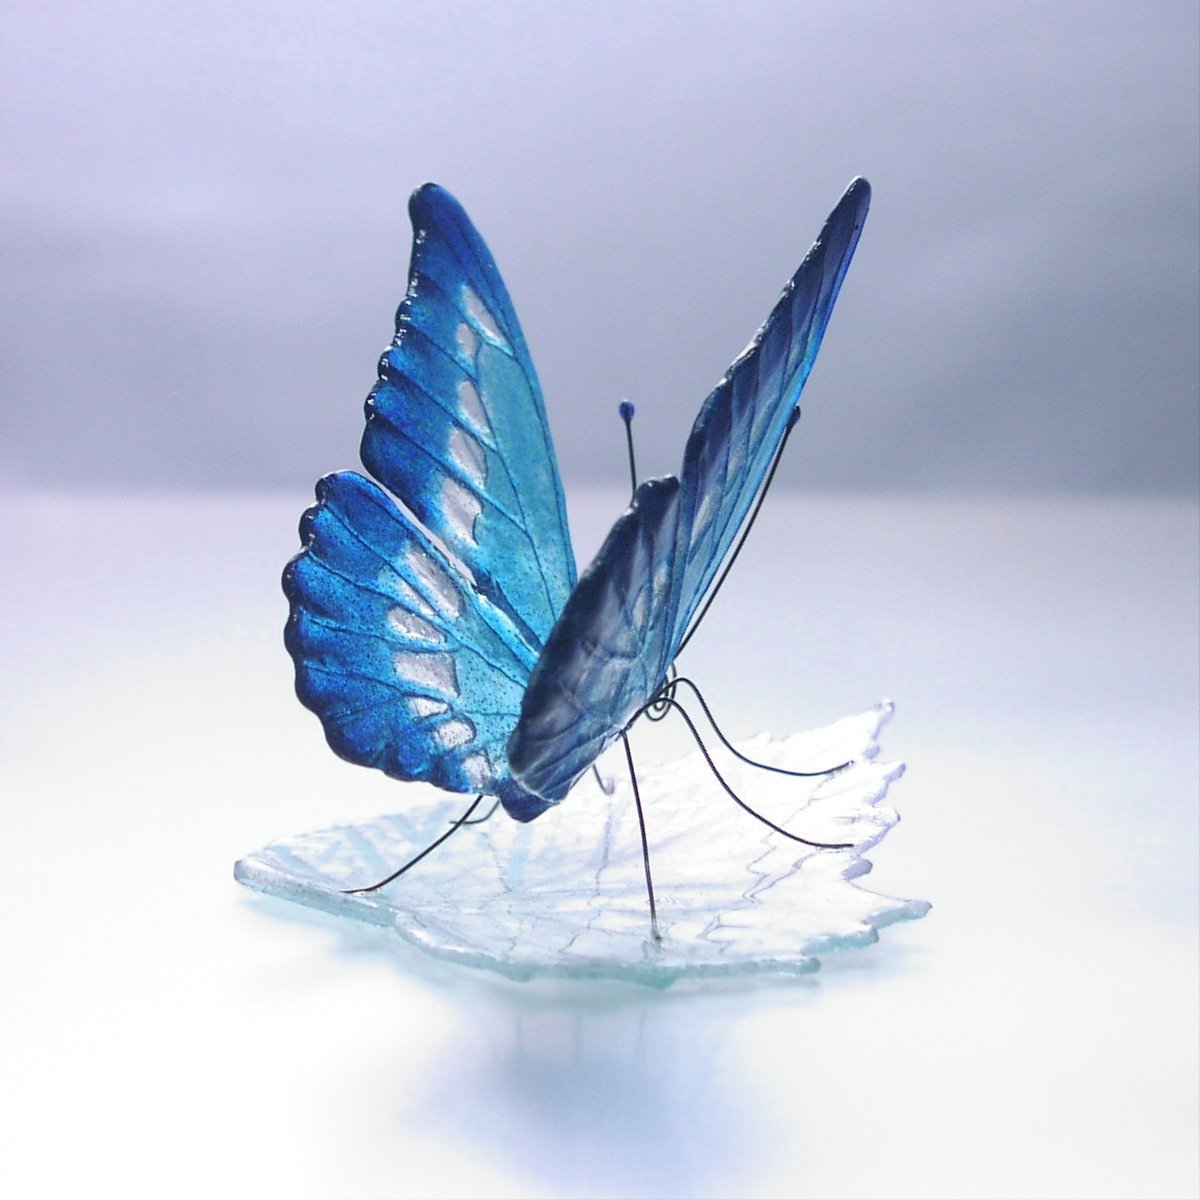 Twitter 上的 三田木精庵 ガラスで作った蝶です 青い宝石 といわれているモルフォ蝶を オリジナルのガラス技法で制作しています 神秘的な青をお楽しみ下さい Online Shop T Co Hn57zzn7c0 ガラスの蝶 ガラス工芸 パートドヴェール モルフォ蝶